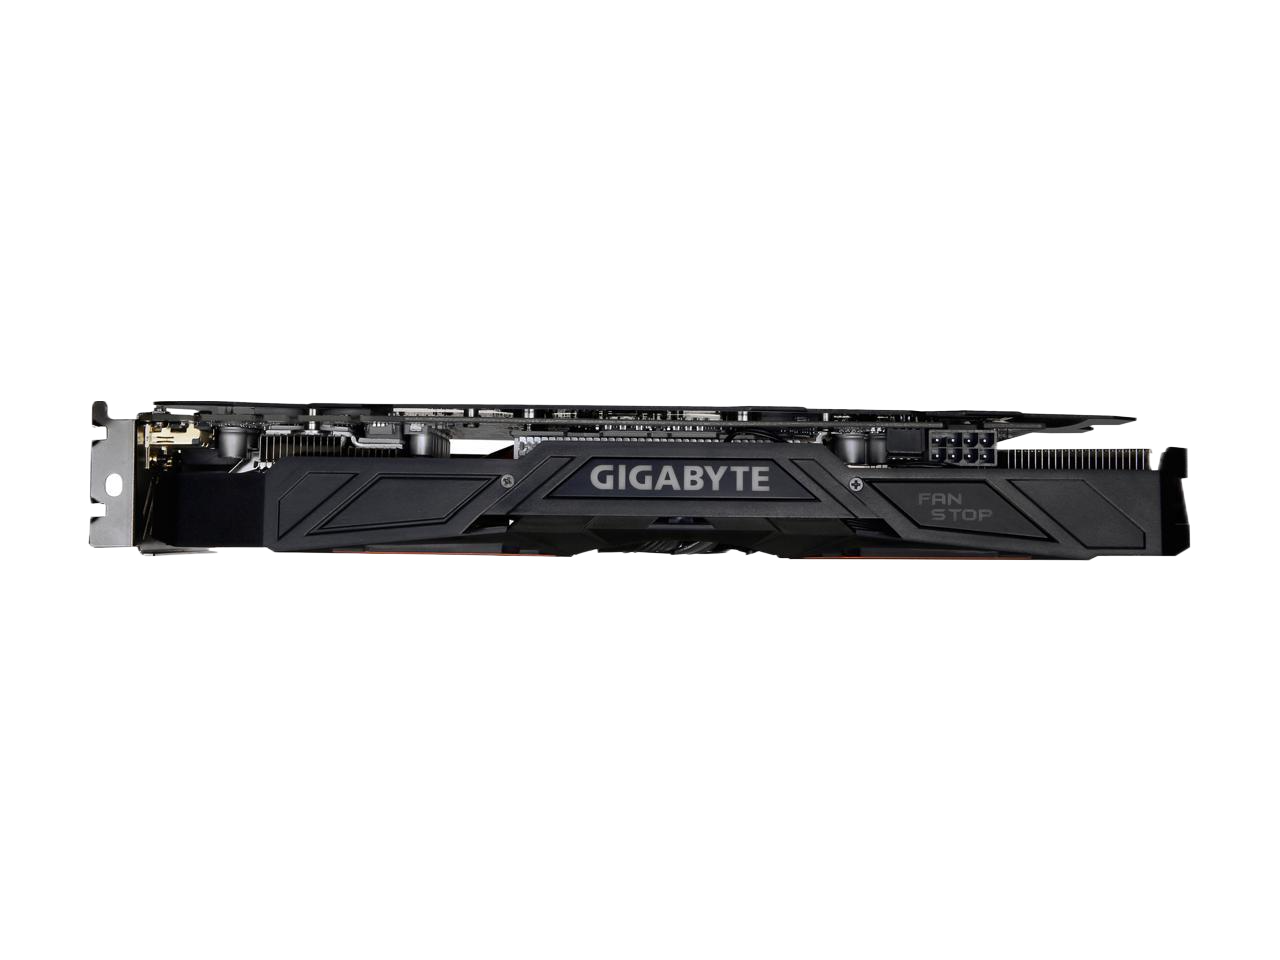 GIGABYTE GeForce GTX 1070 Ti 8GB GDDR5 PCI Express 3.0 x16 SLI Support ATX Video Card GV-N107TGAMING-8GD